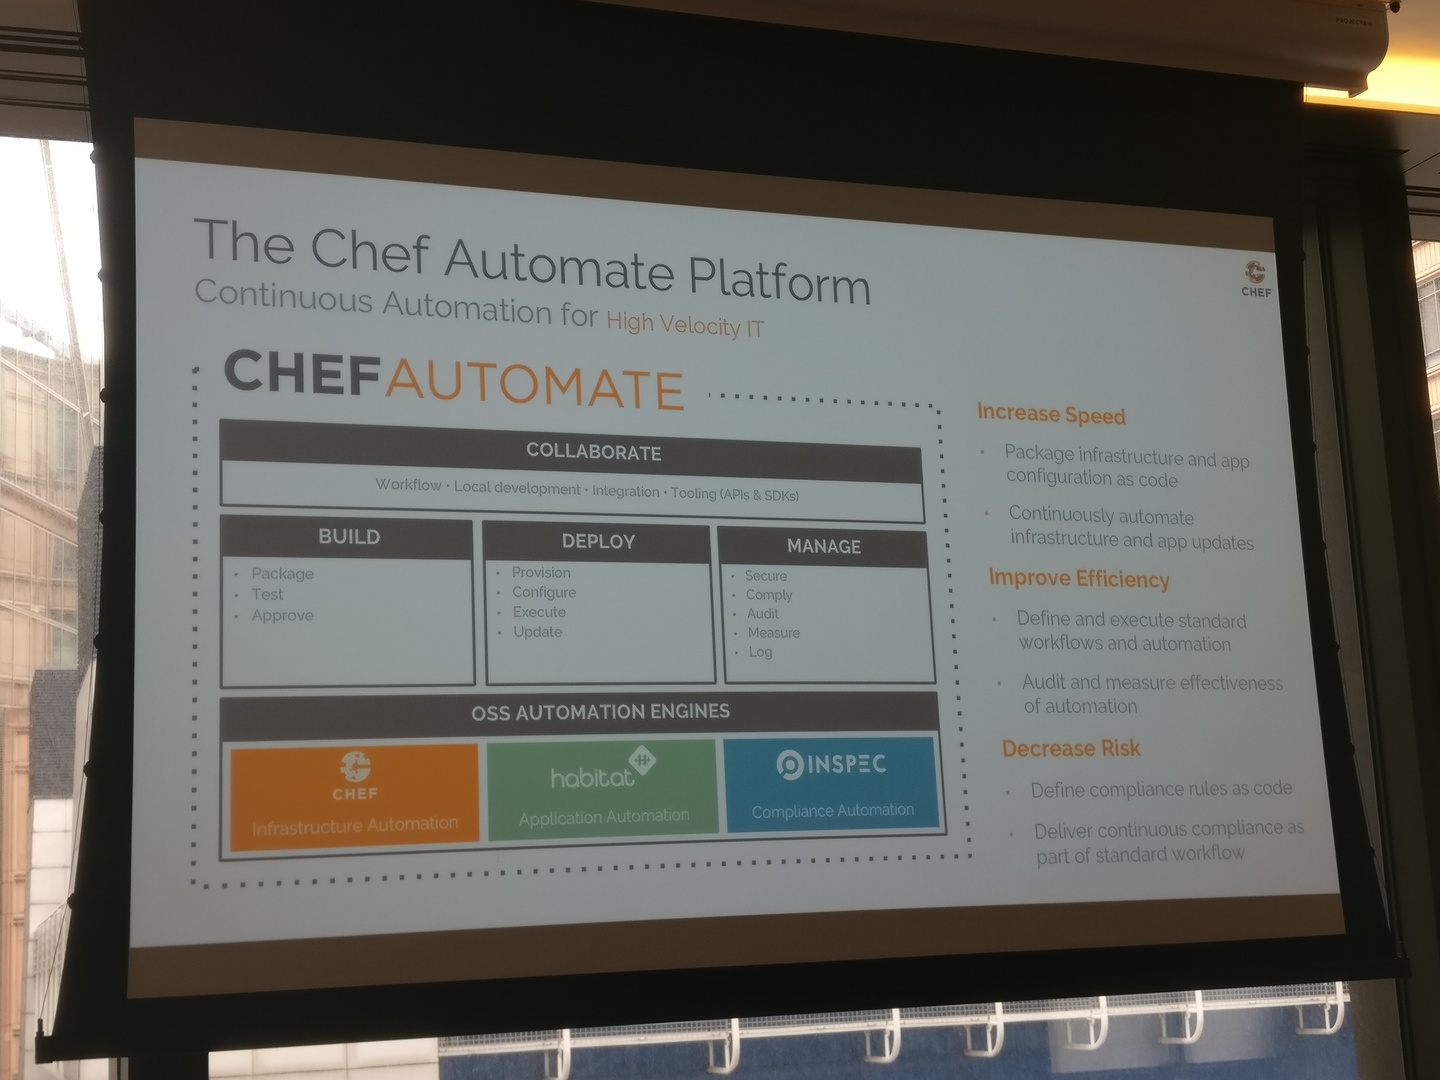 The Chef Automate platform